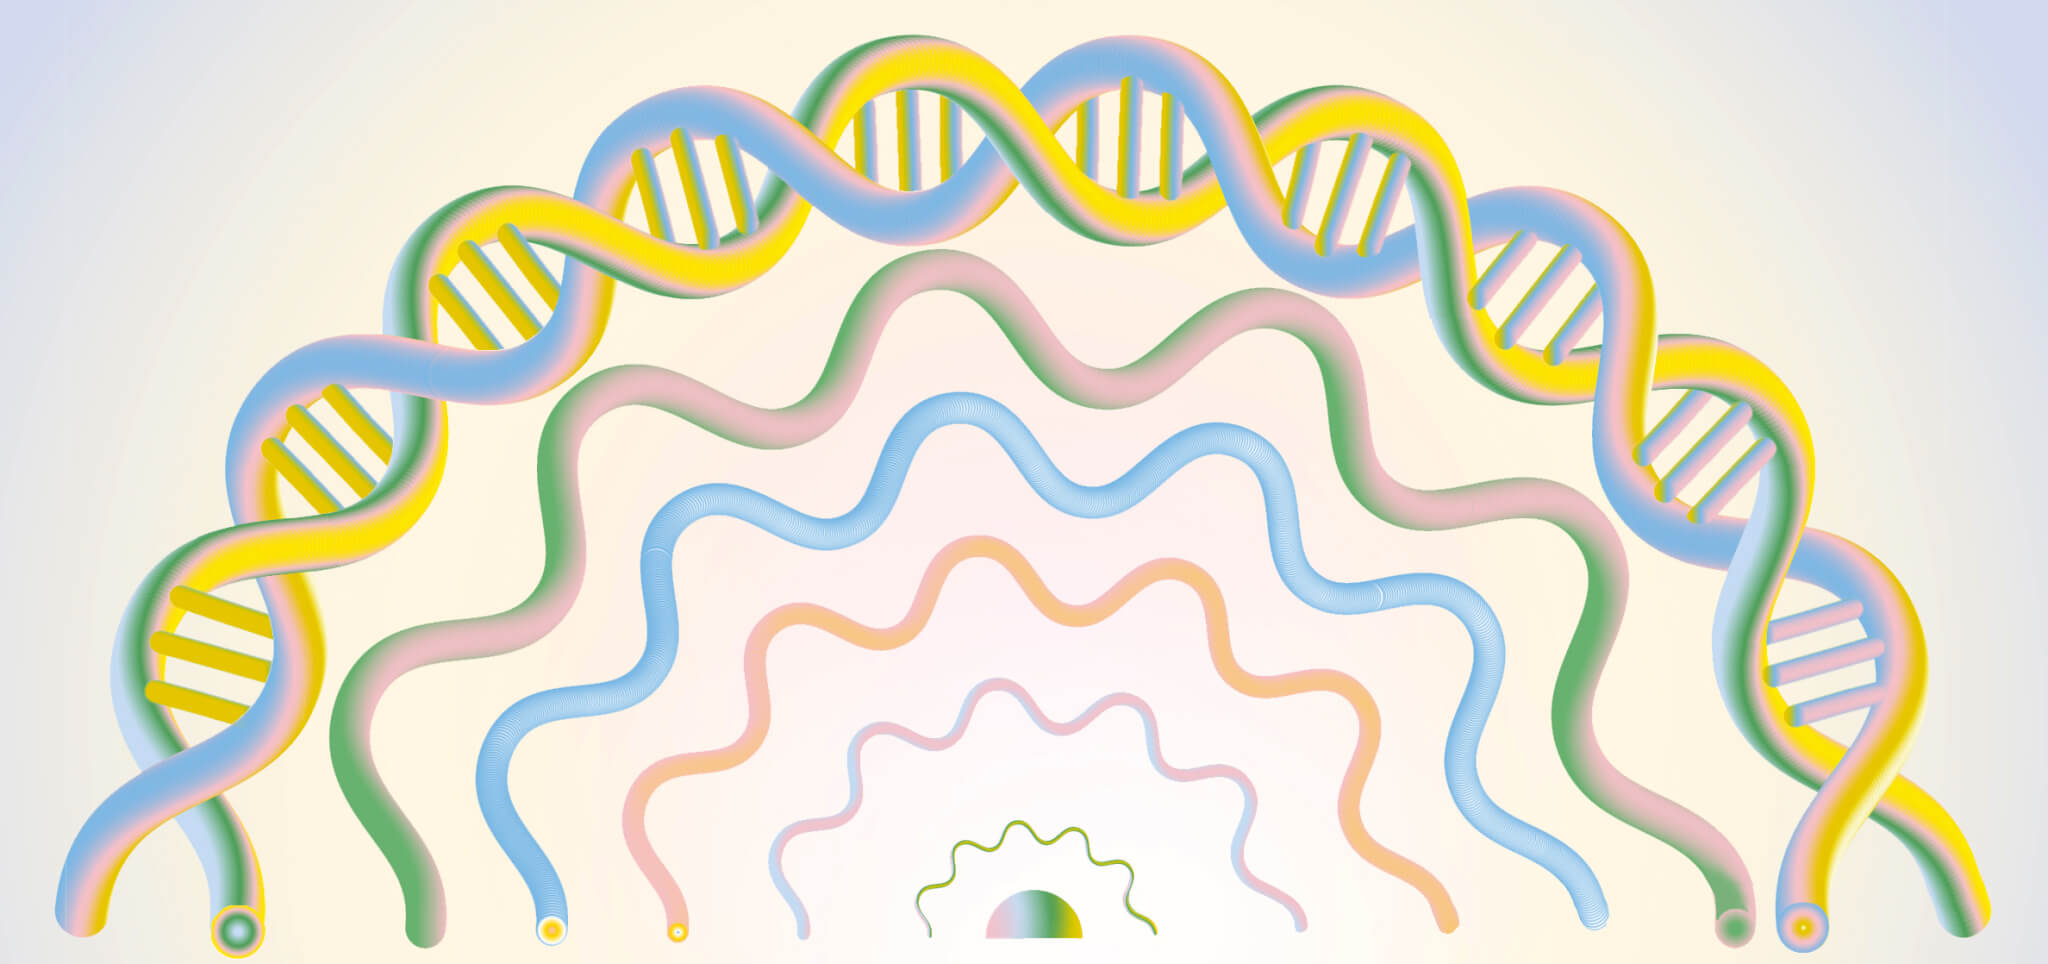 Our DNA: Unreasonable Manifesto